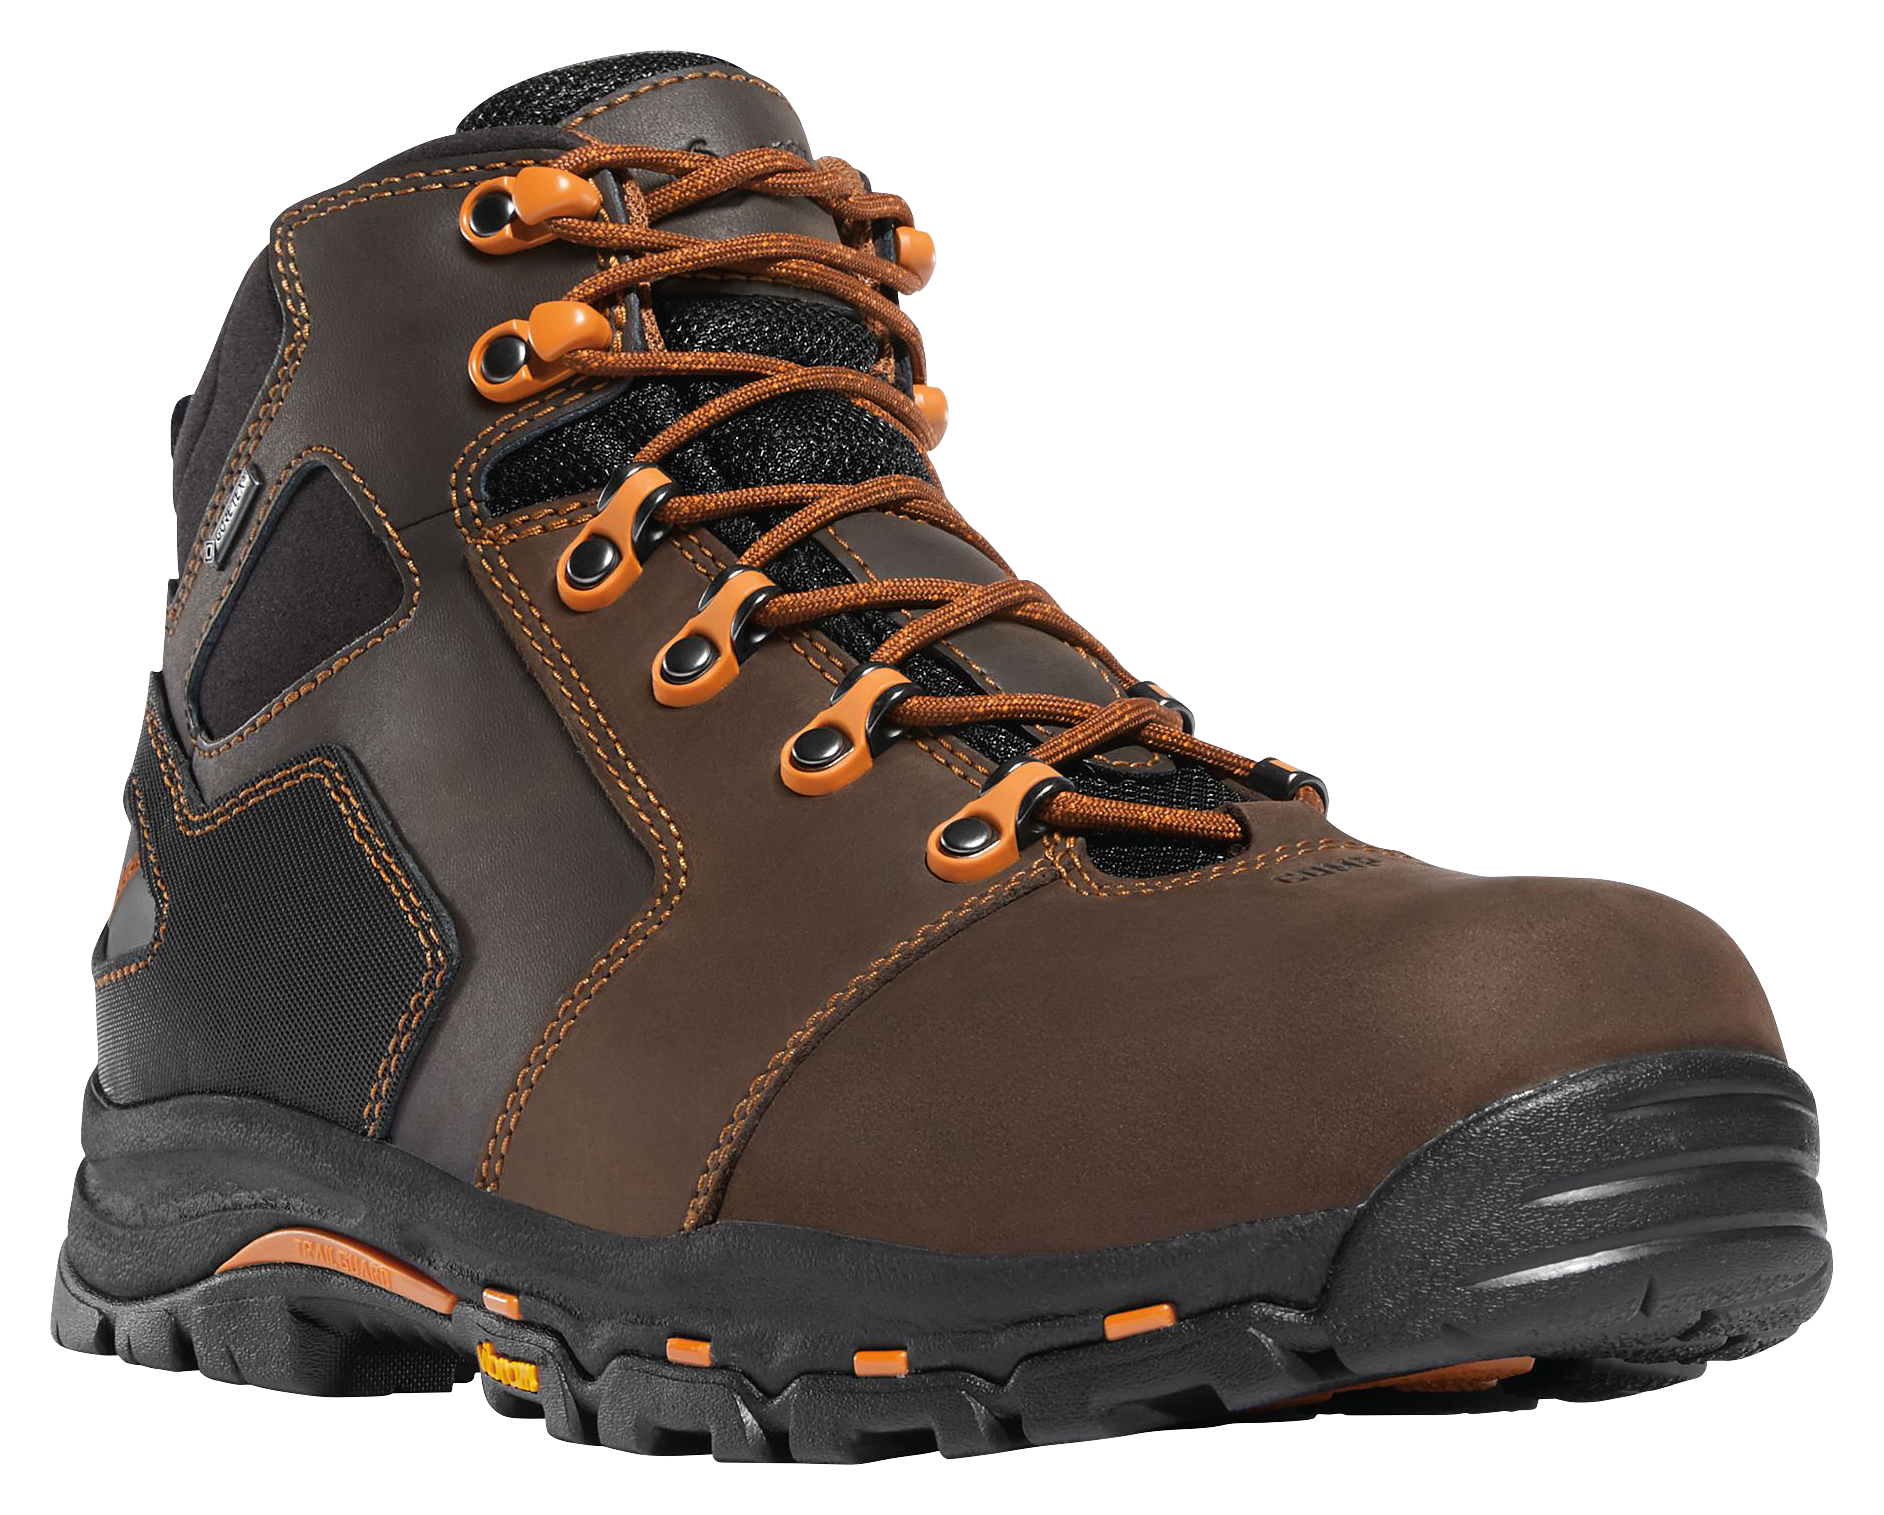 Danner Vicious 4.5'' GORE-TEX EH Work Boots for Men - Brown/Orange - 9M